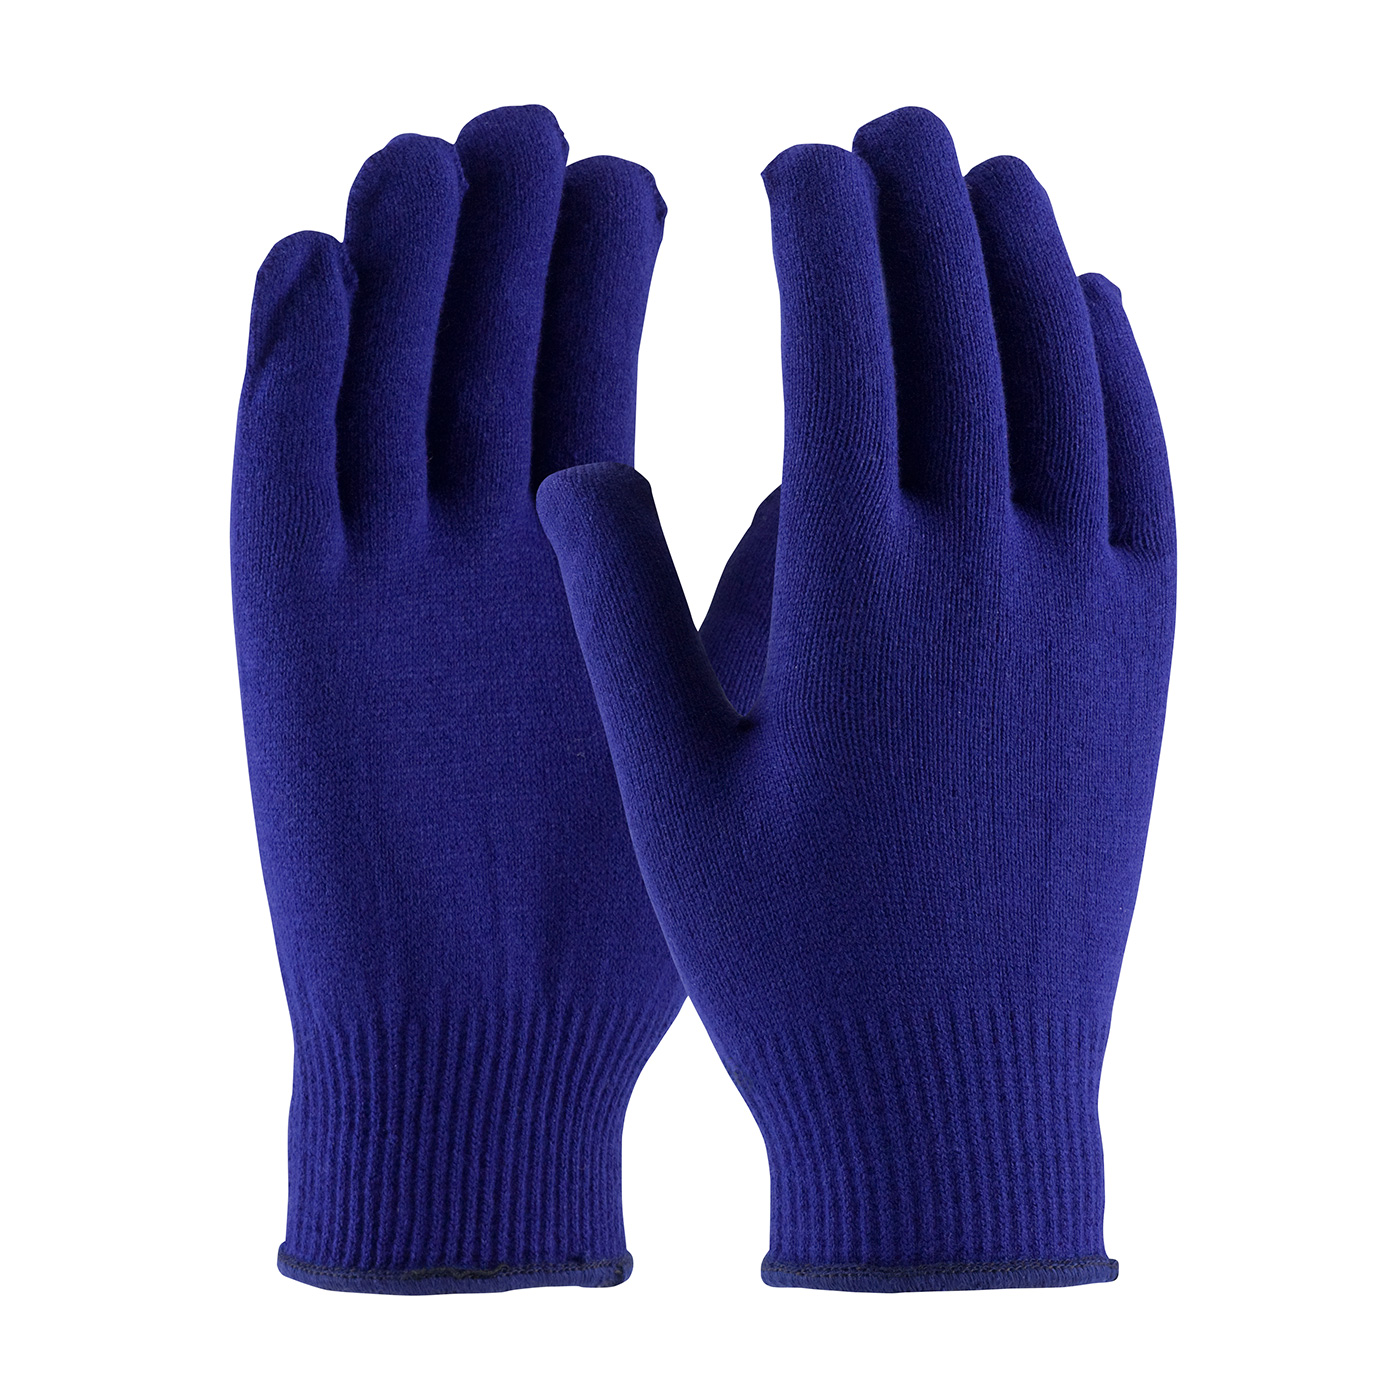 Minus33 Merino Wool Glove Liner - Warm Base Layer - Ski Liner Glove - 3  Season Wear - Multiple Colors and Sizes - Navy Blue - X-Large 